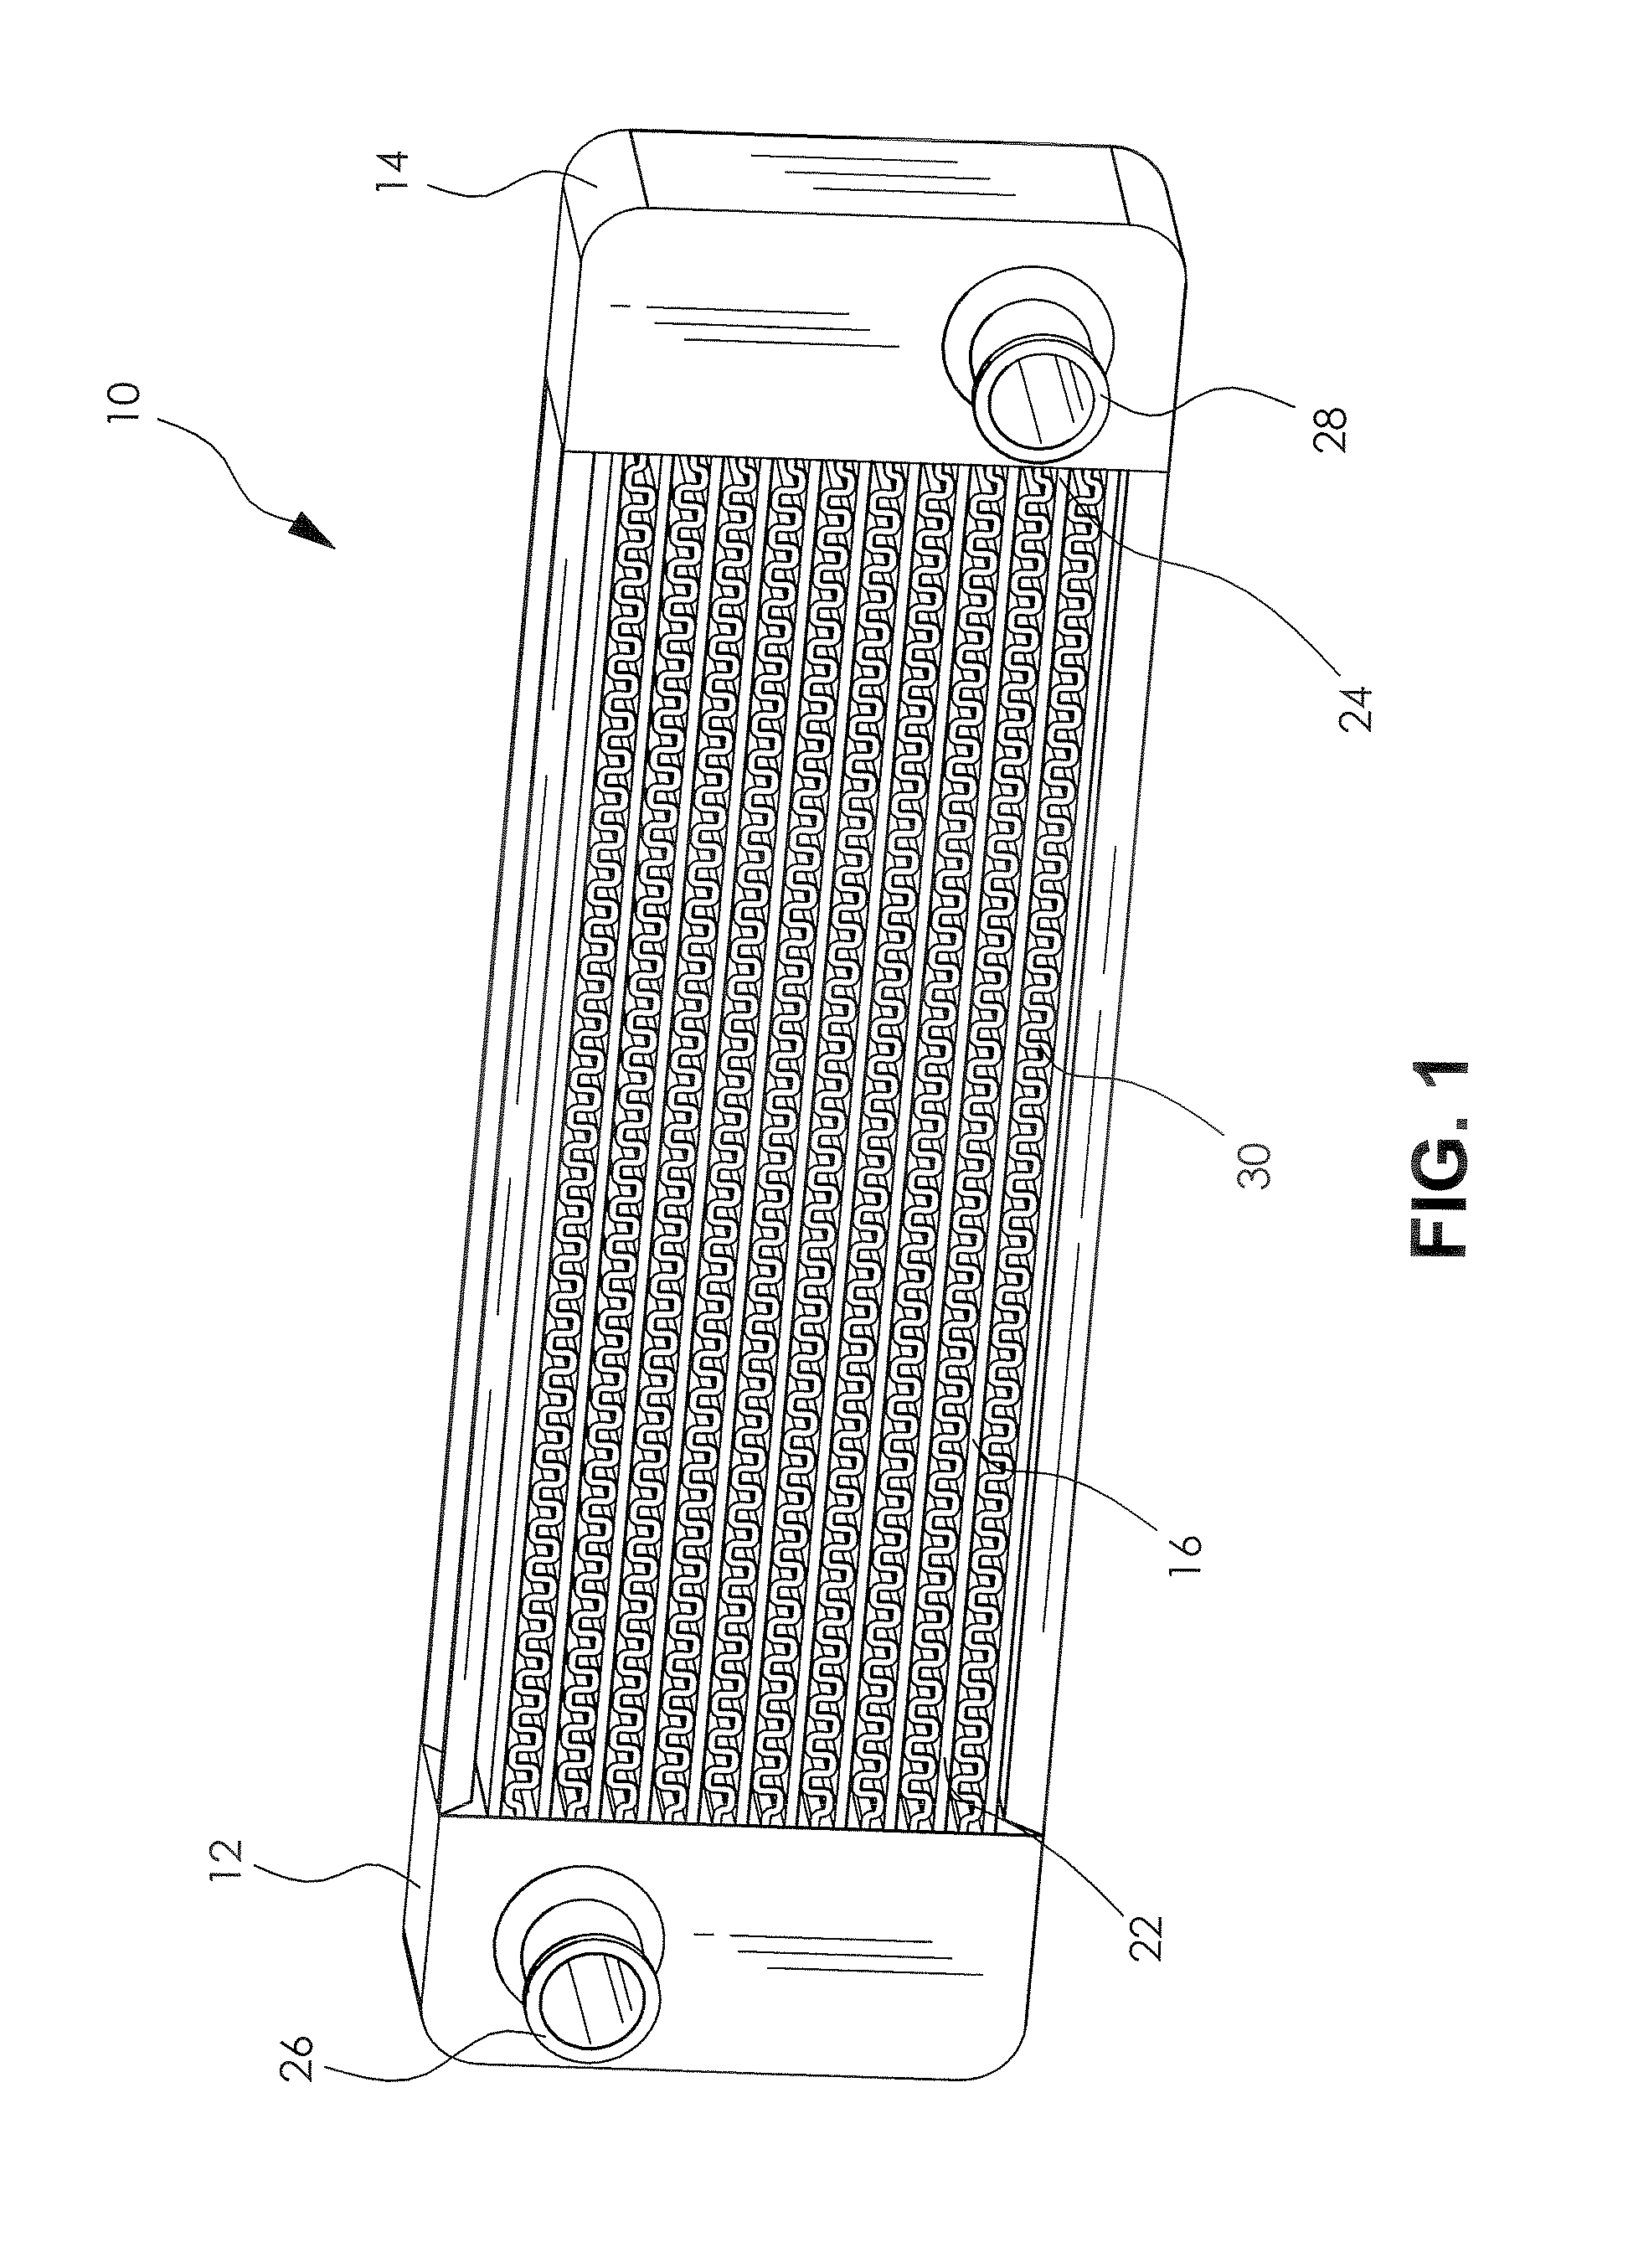 Radiator tube dimple pattern